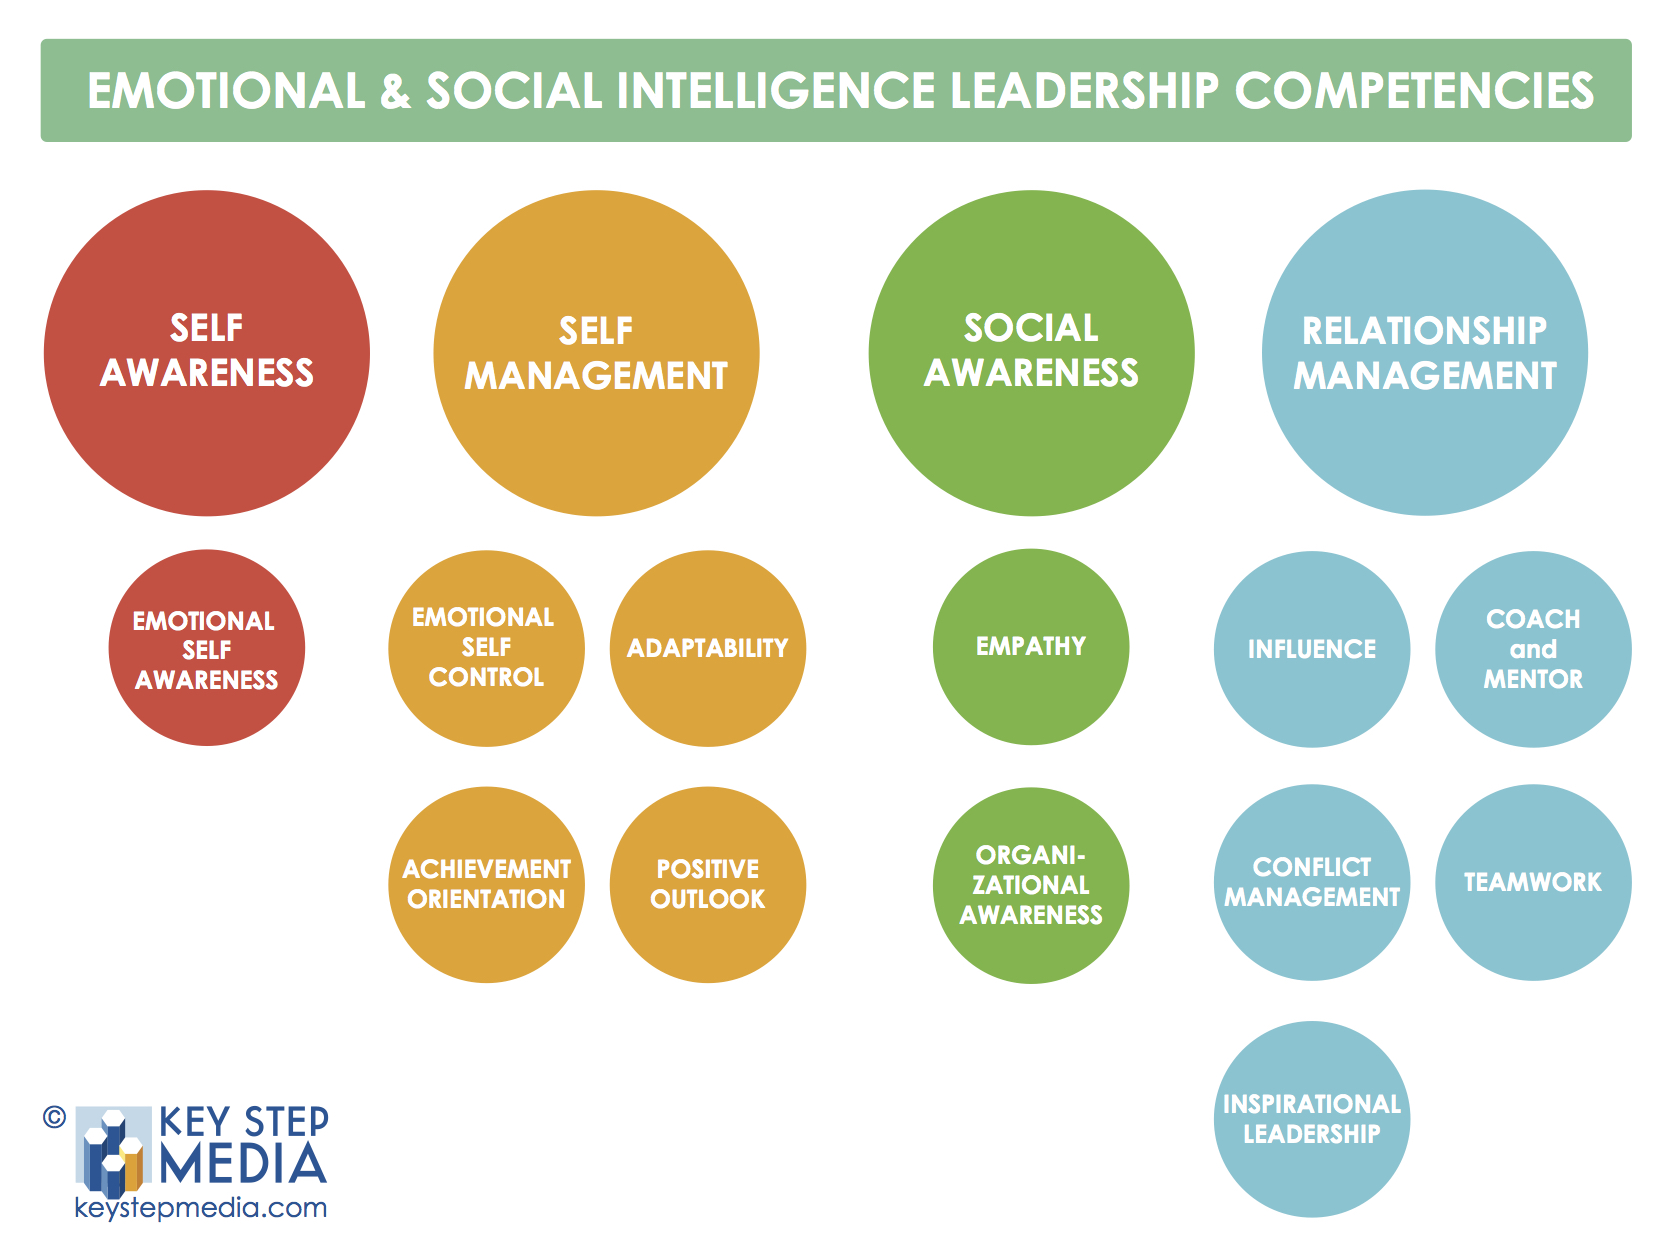 Emotional social intelligence leadership competency model